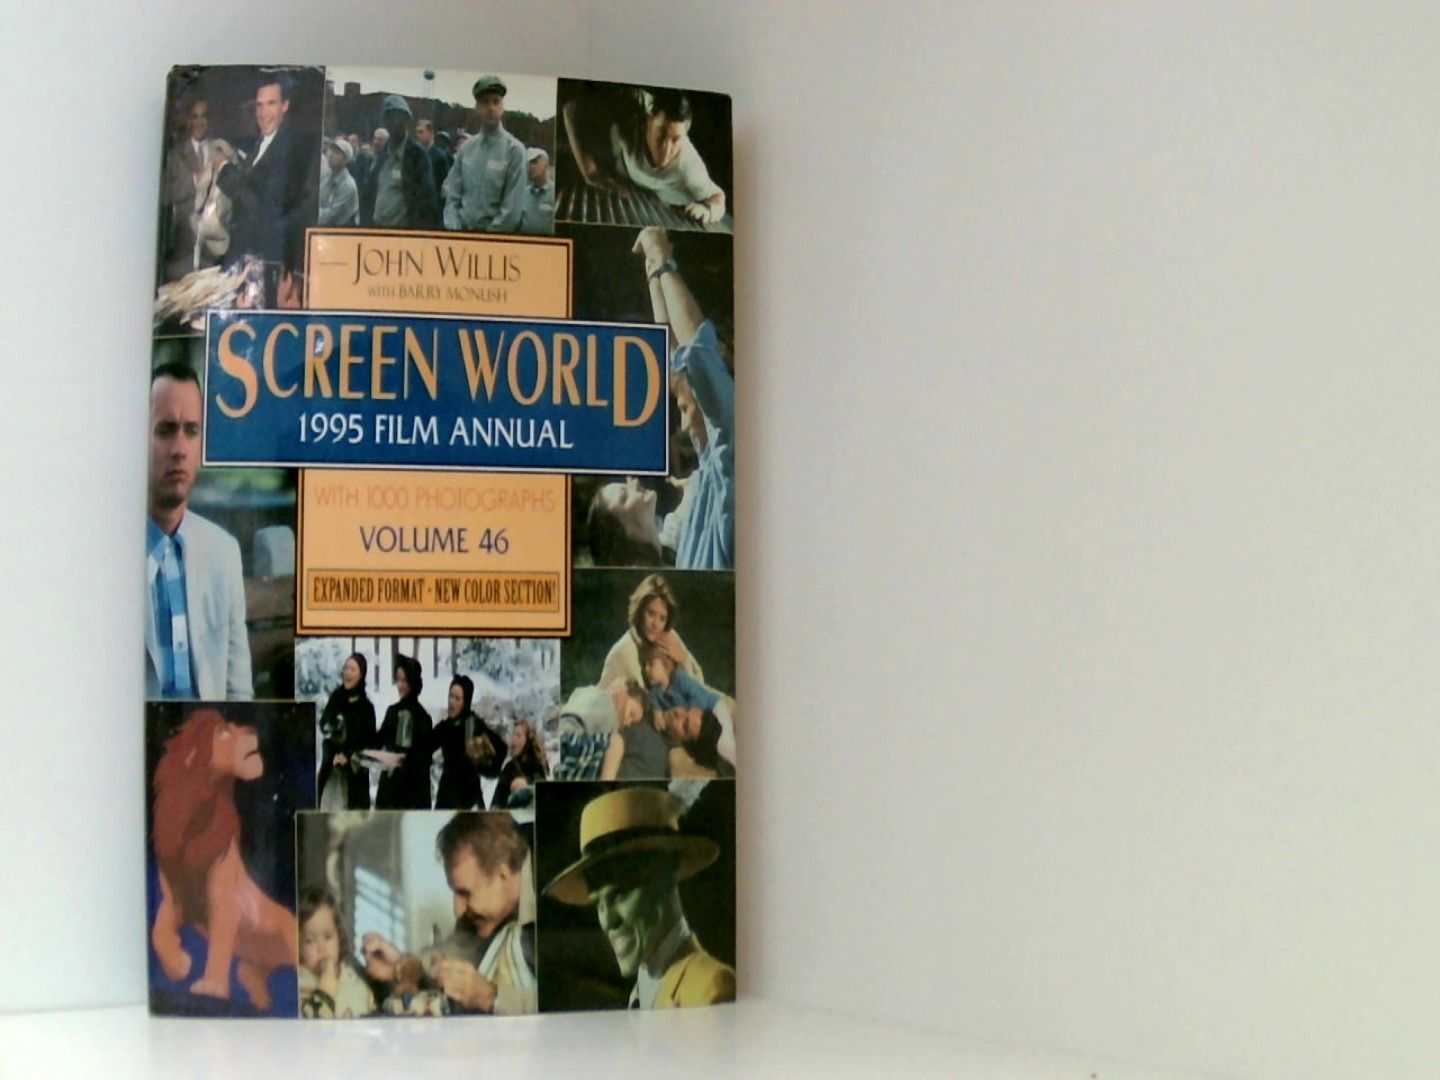 Screen World 1995 Film Annual: With 1000 Photographs - Monush, Barry und John Willis